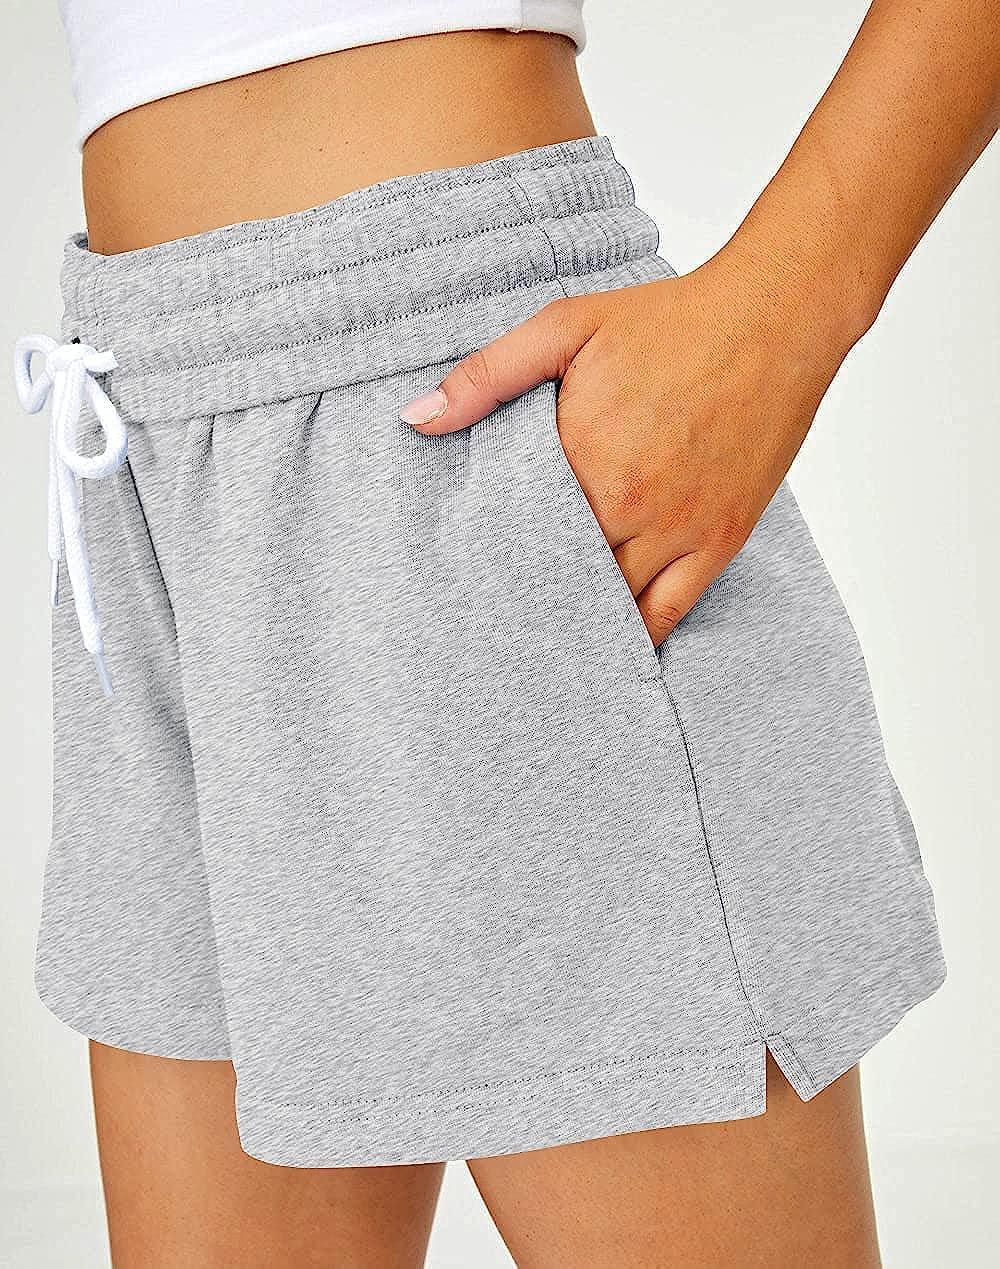 Grey Women Shorts Cheap Sale